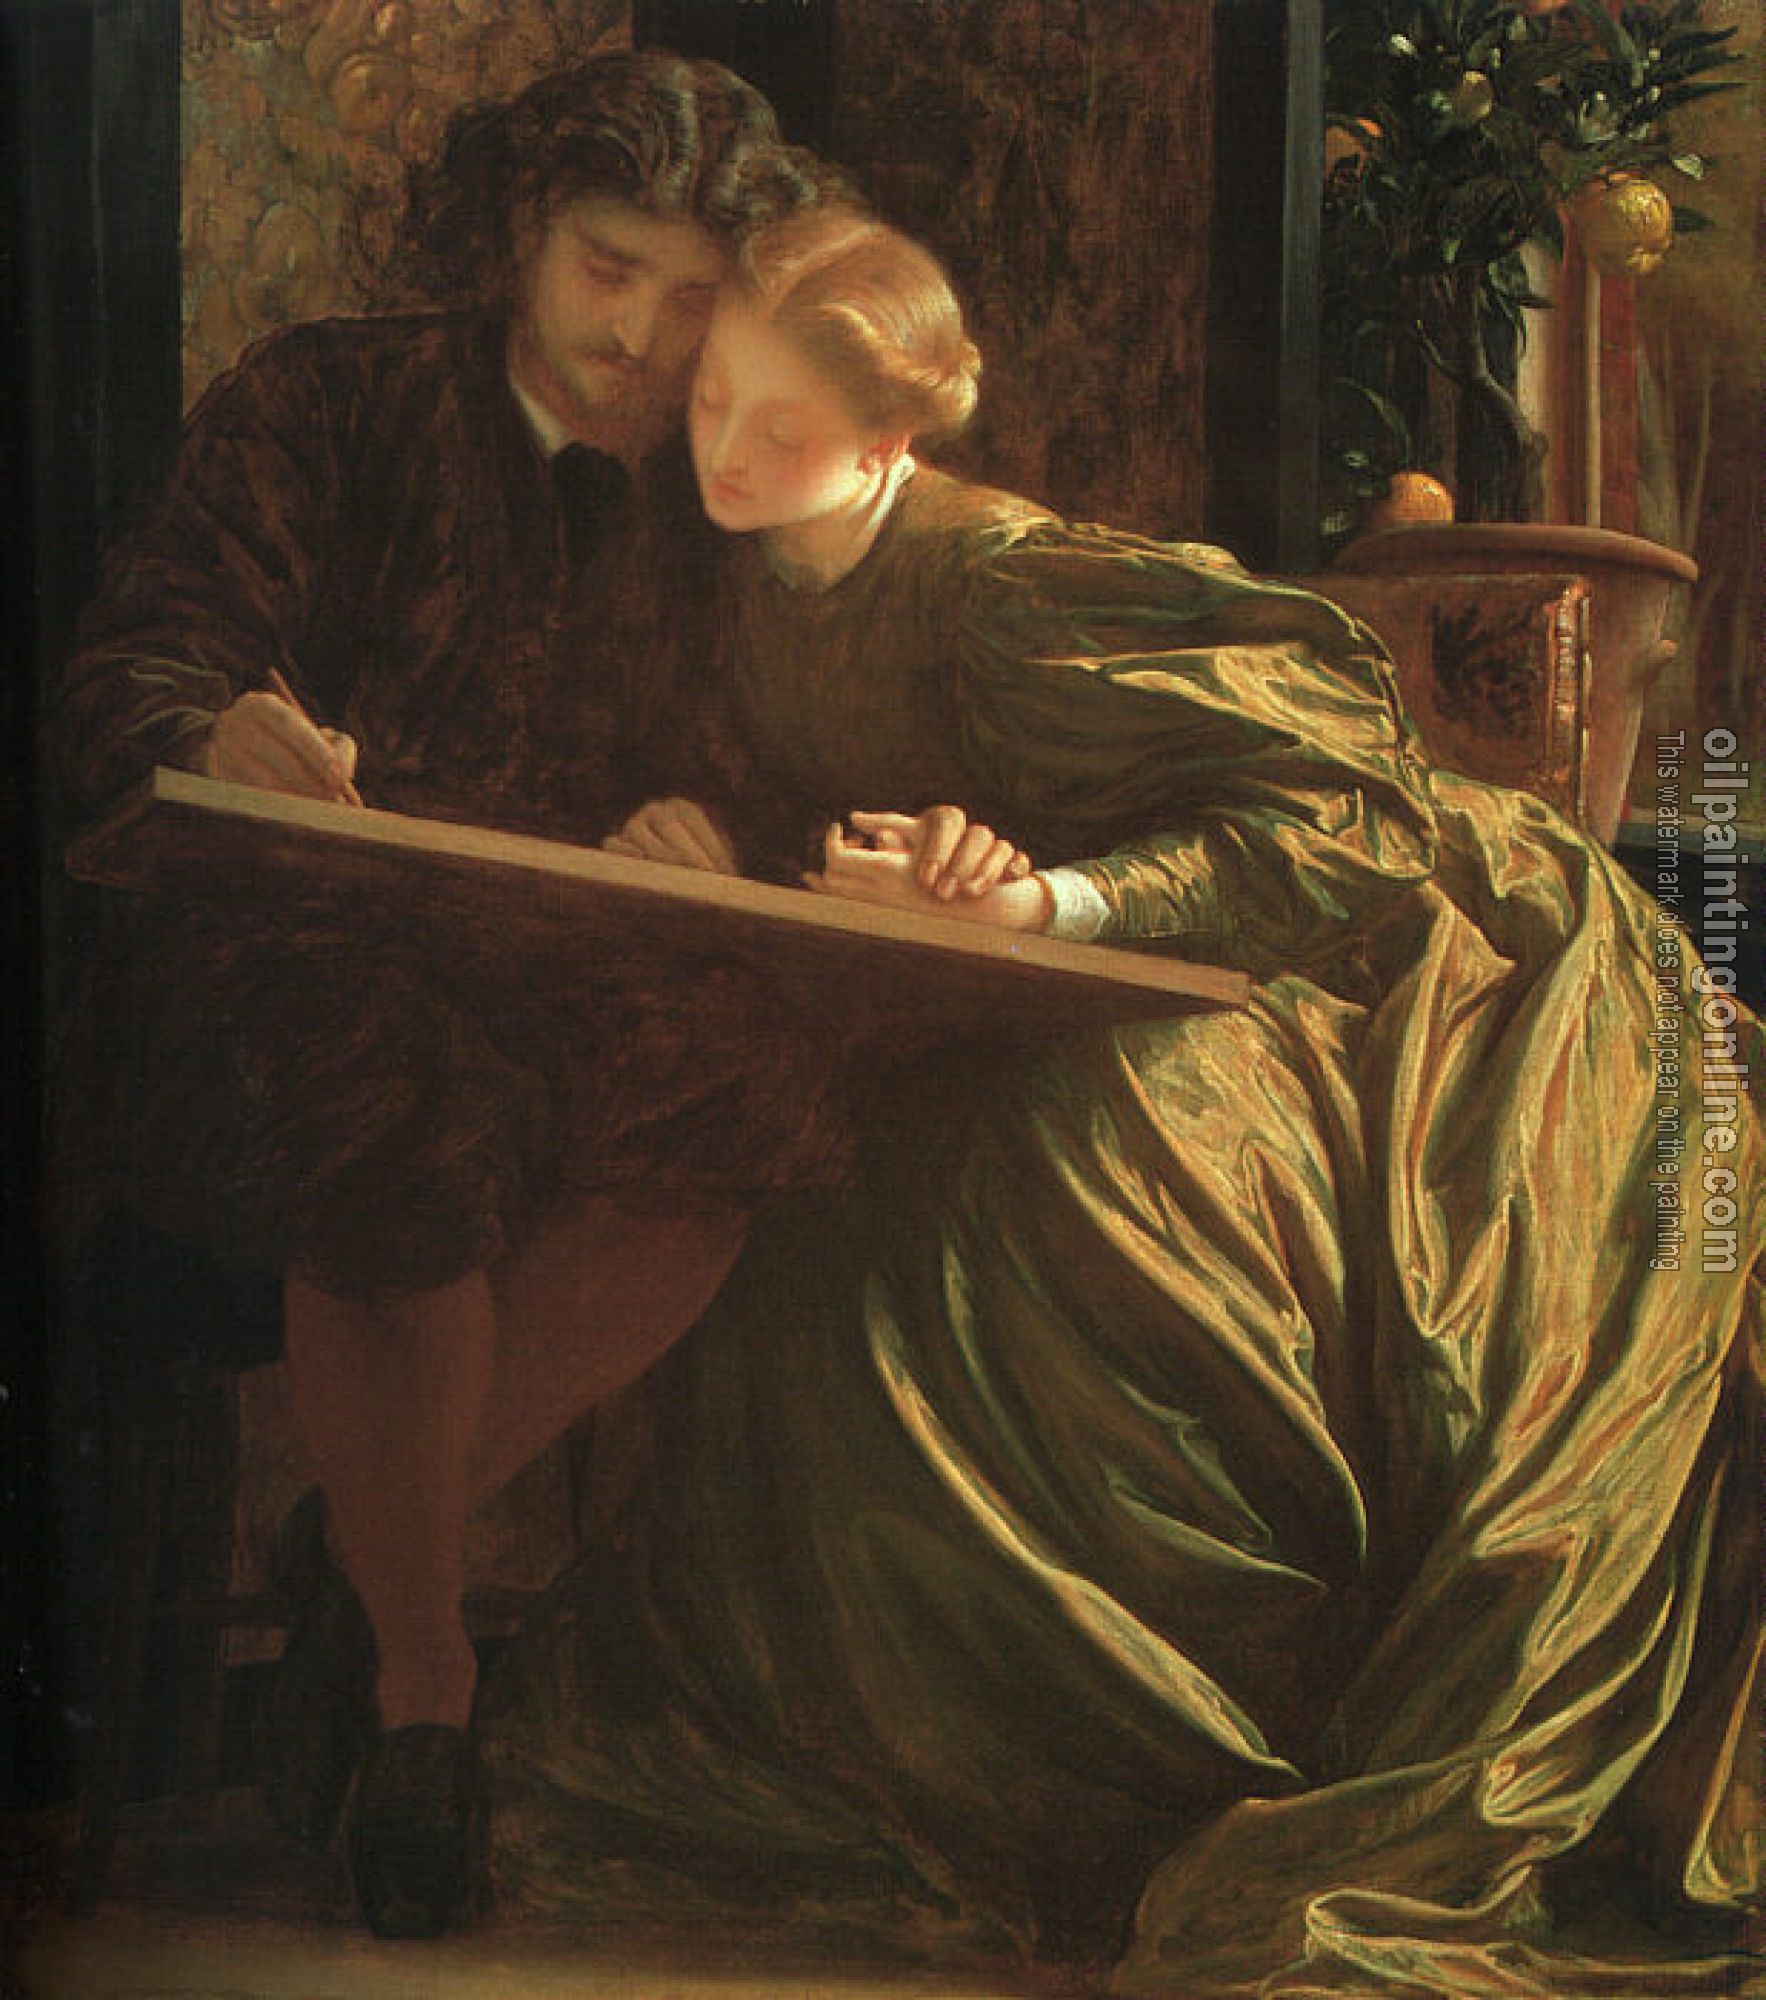 Leighton, Lord Frederick - The Painter's Honeymoon